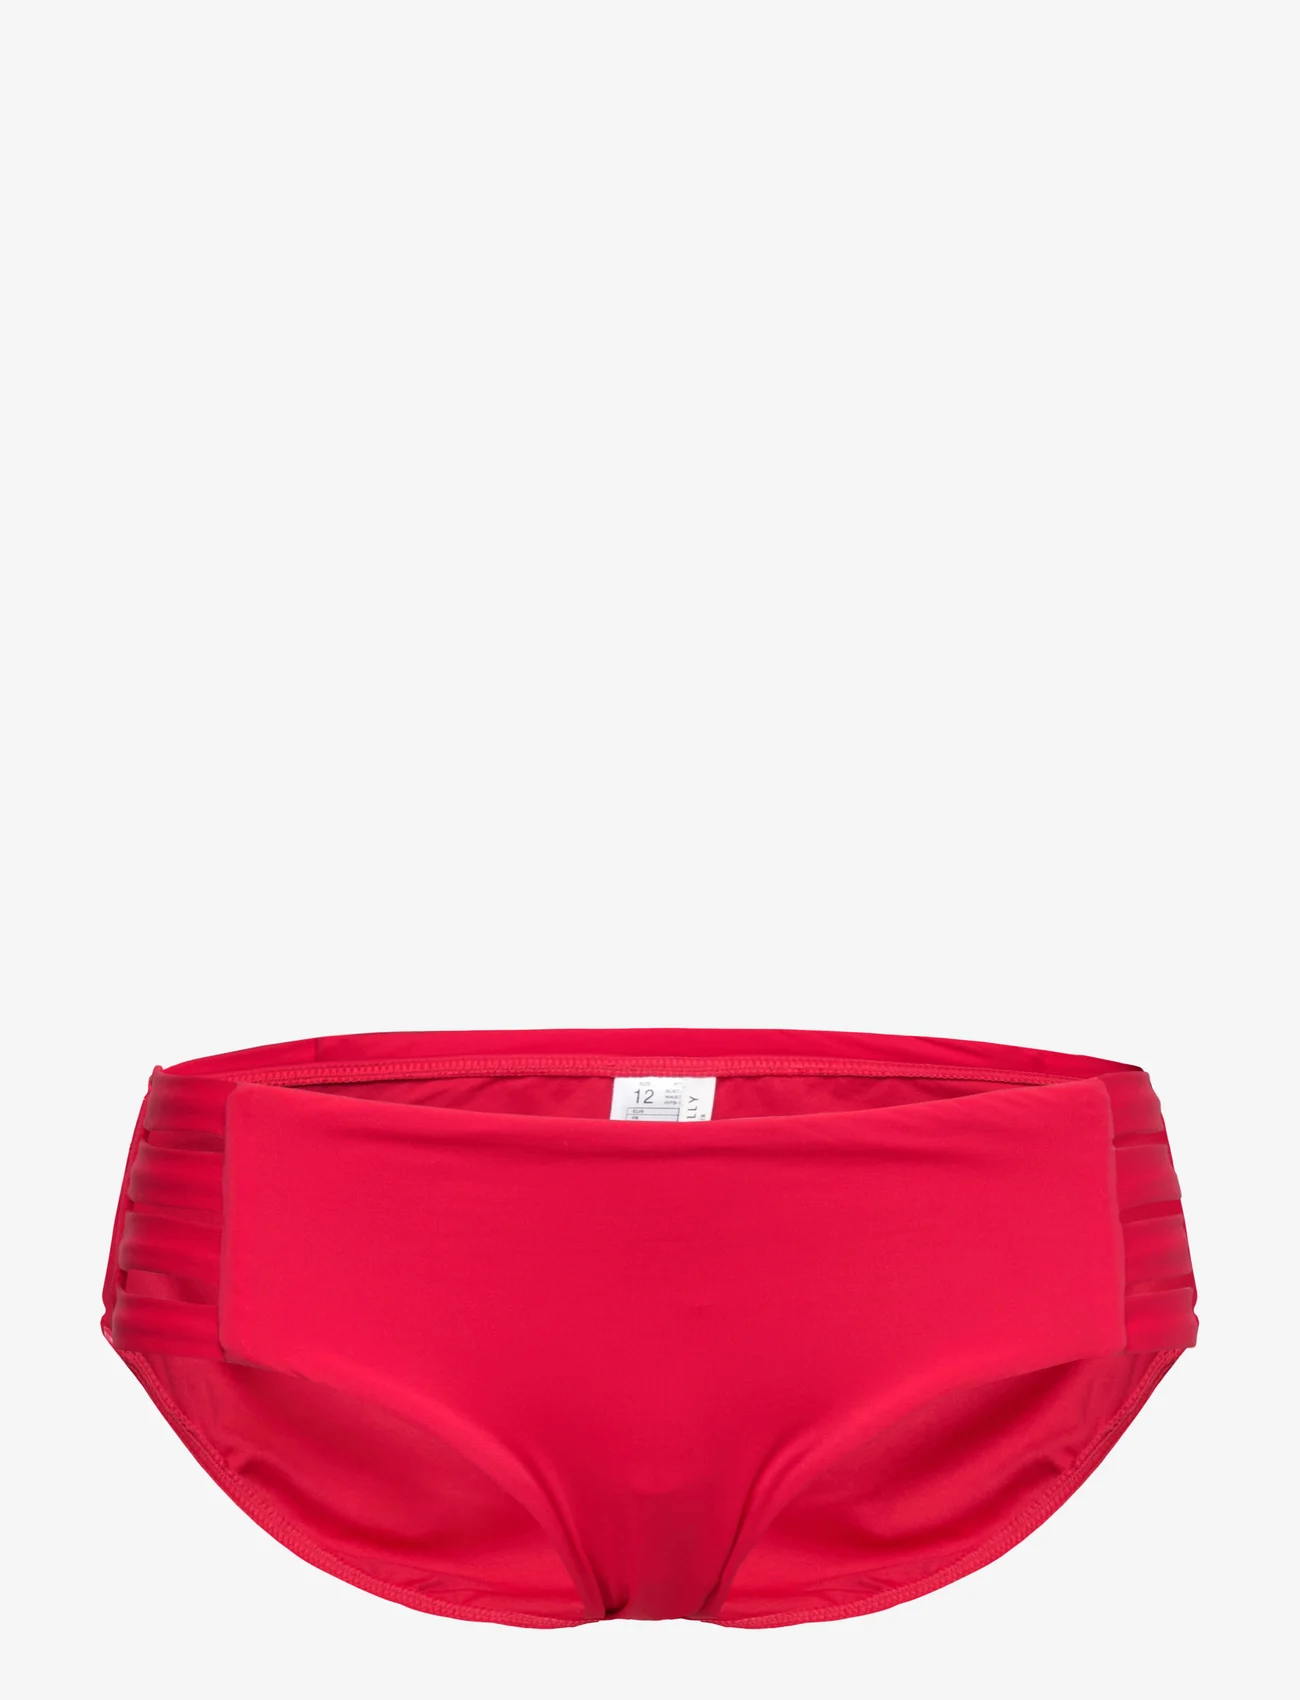 Seafolly - S.Collective Multi Strap Hipster Pant - bikinihousut - chilli red - 0